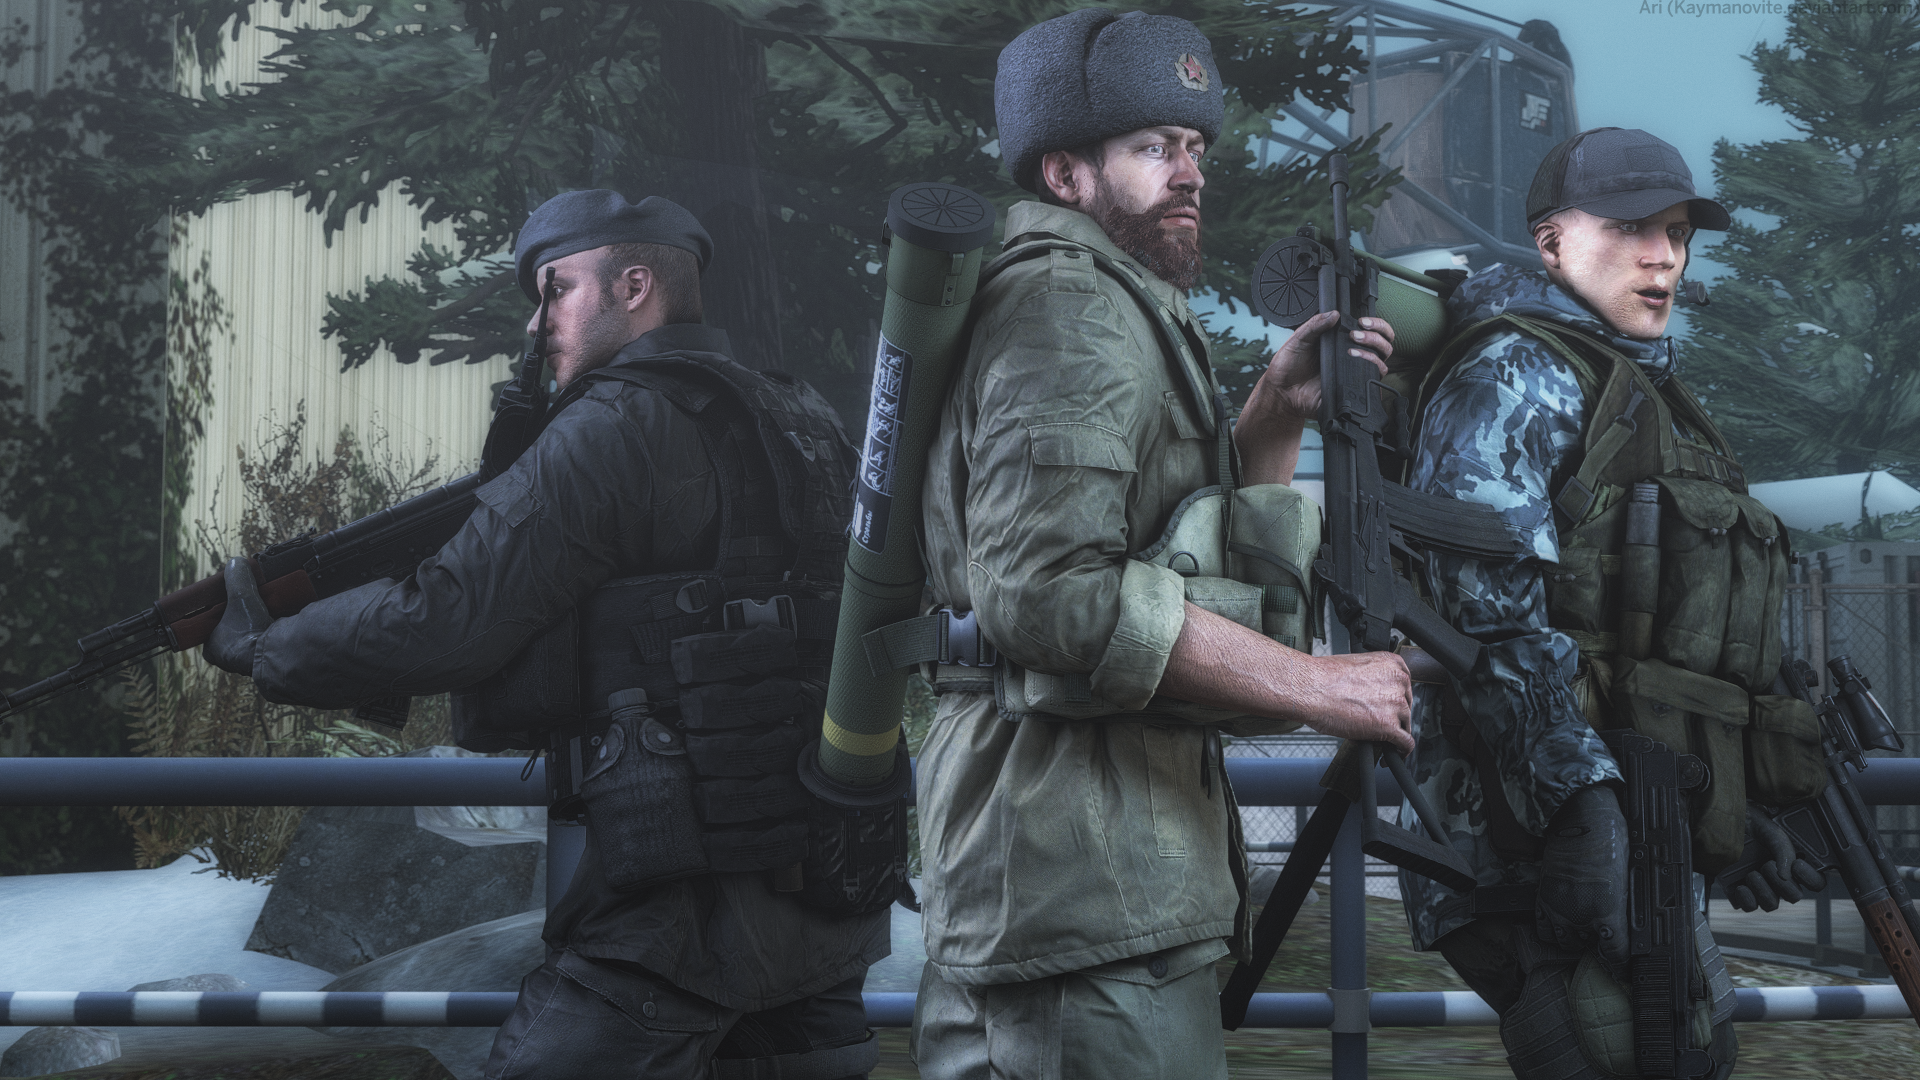 Call Of Duty: Advanced Warfare PSD by uLtRaMa6nEt1cART on DeviantArt